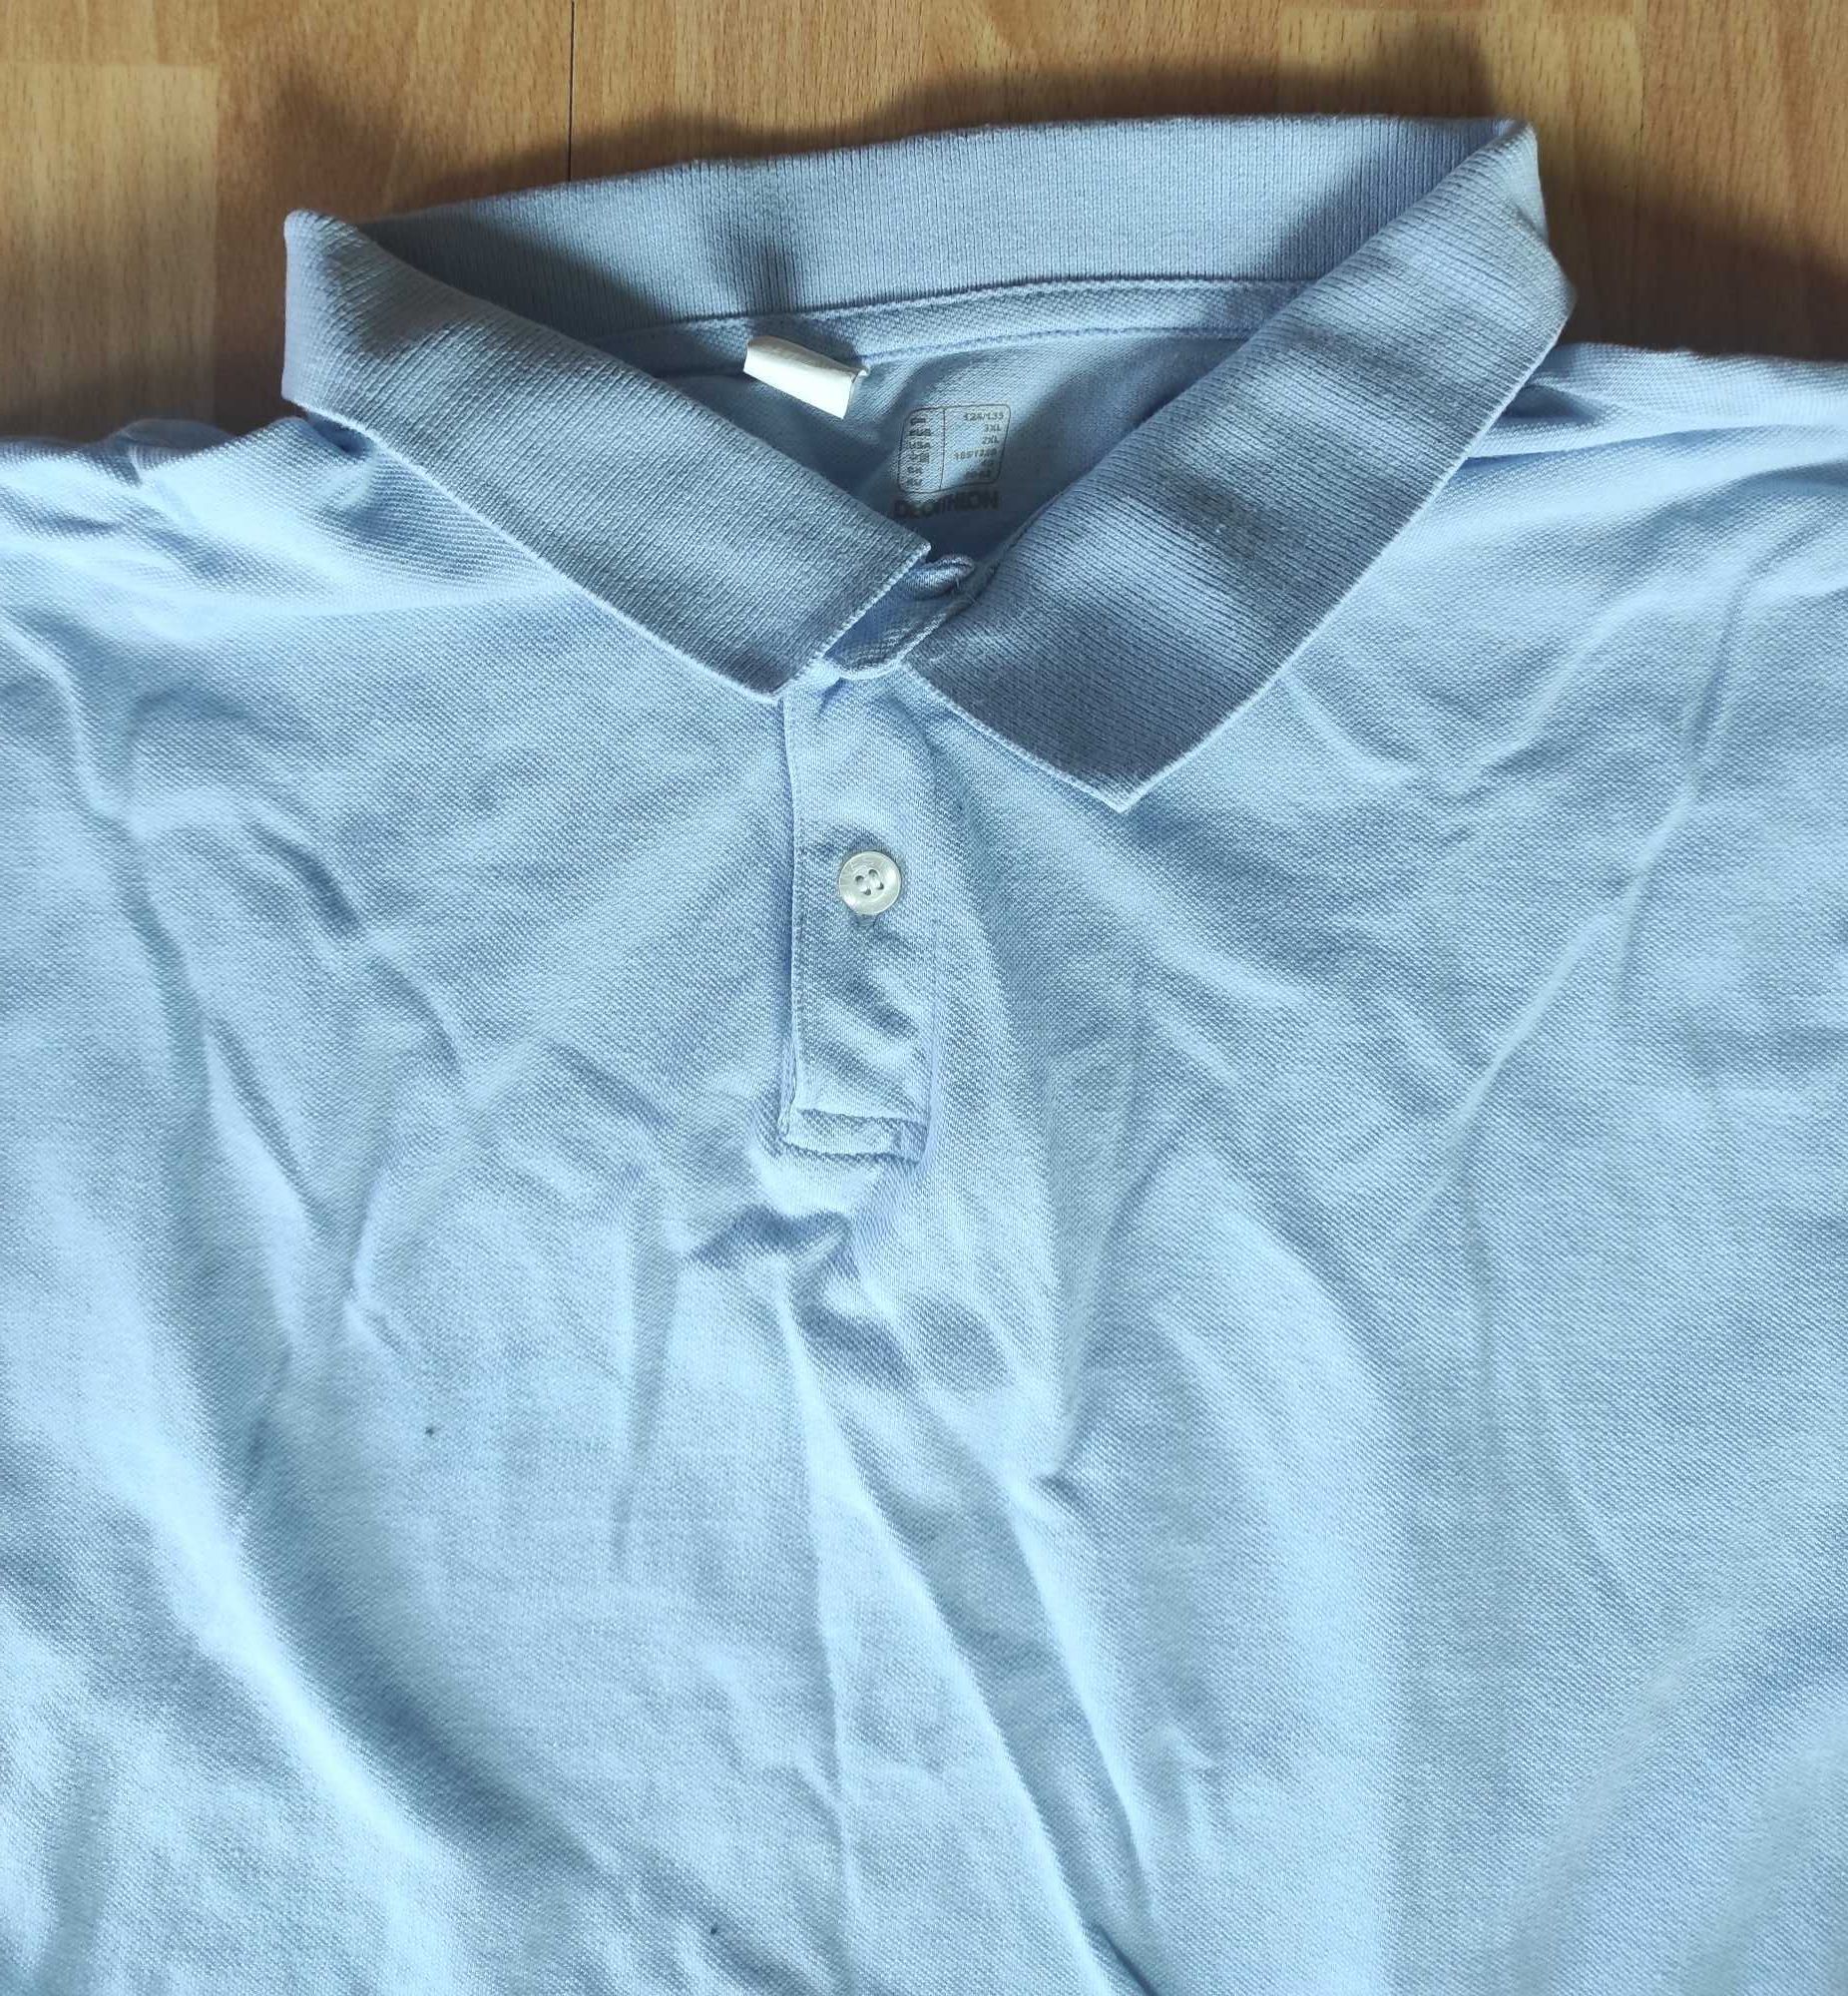 polo t-shirt koszulka męska decathlon duży rozmiar 3XL bawełna 100%